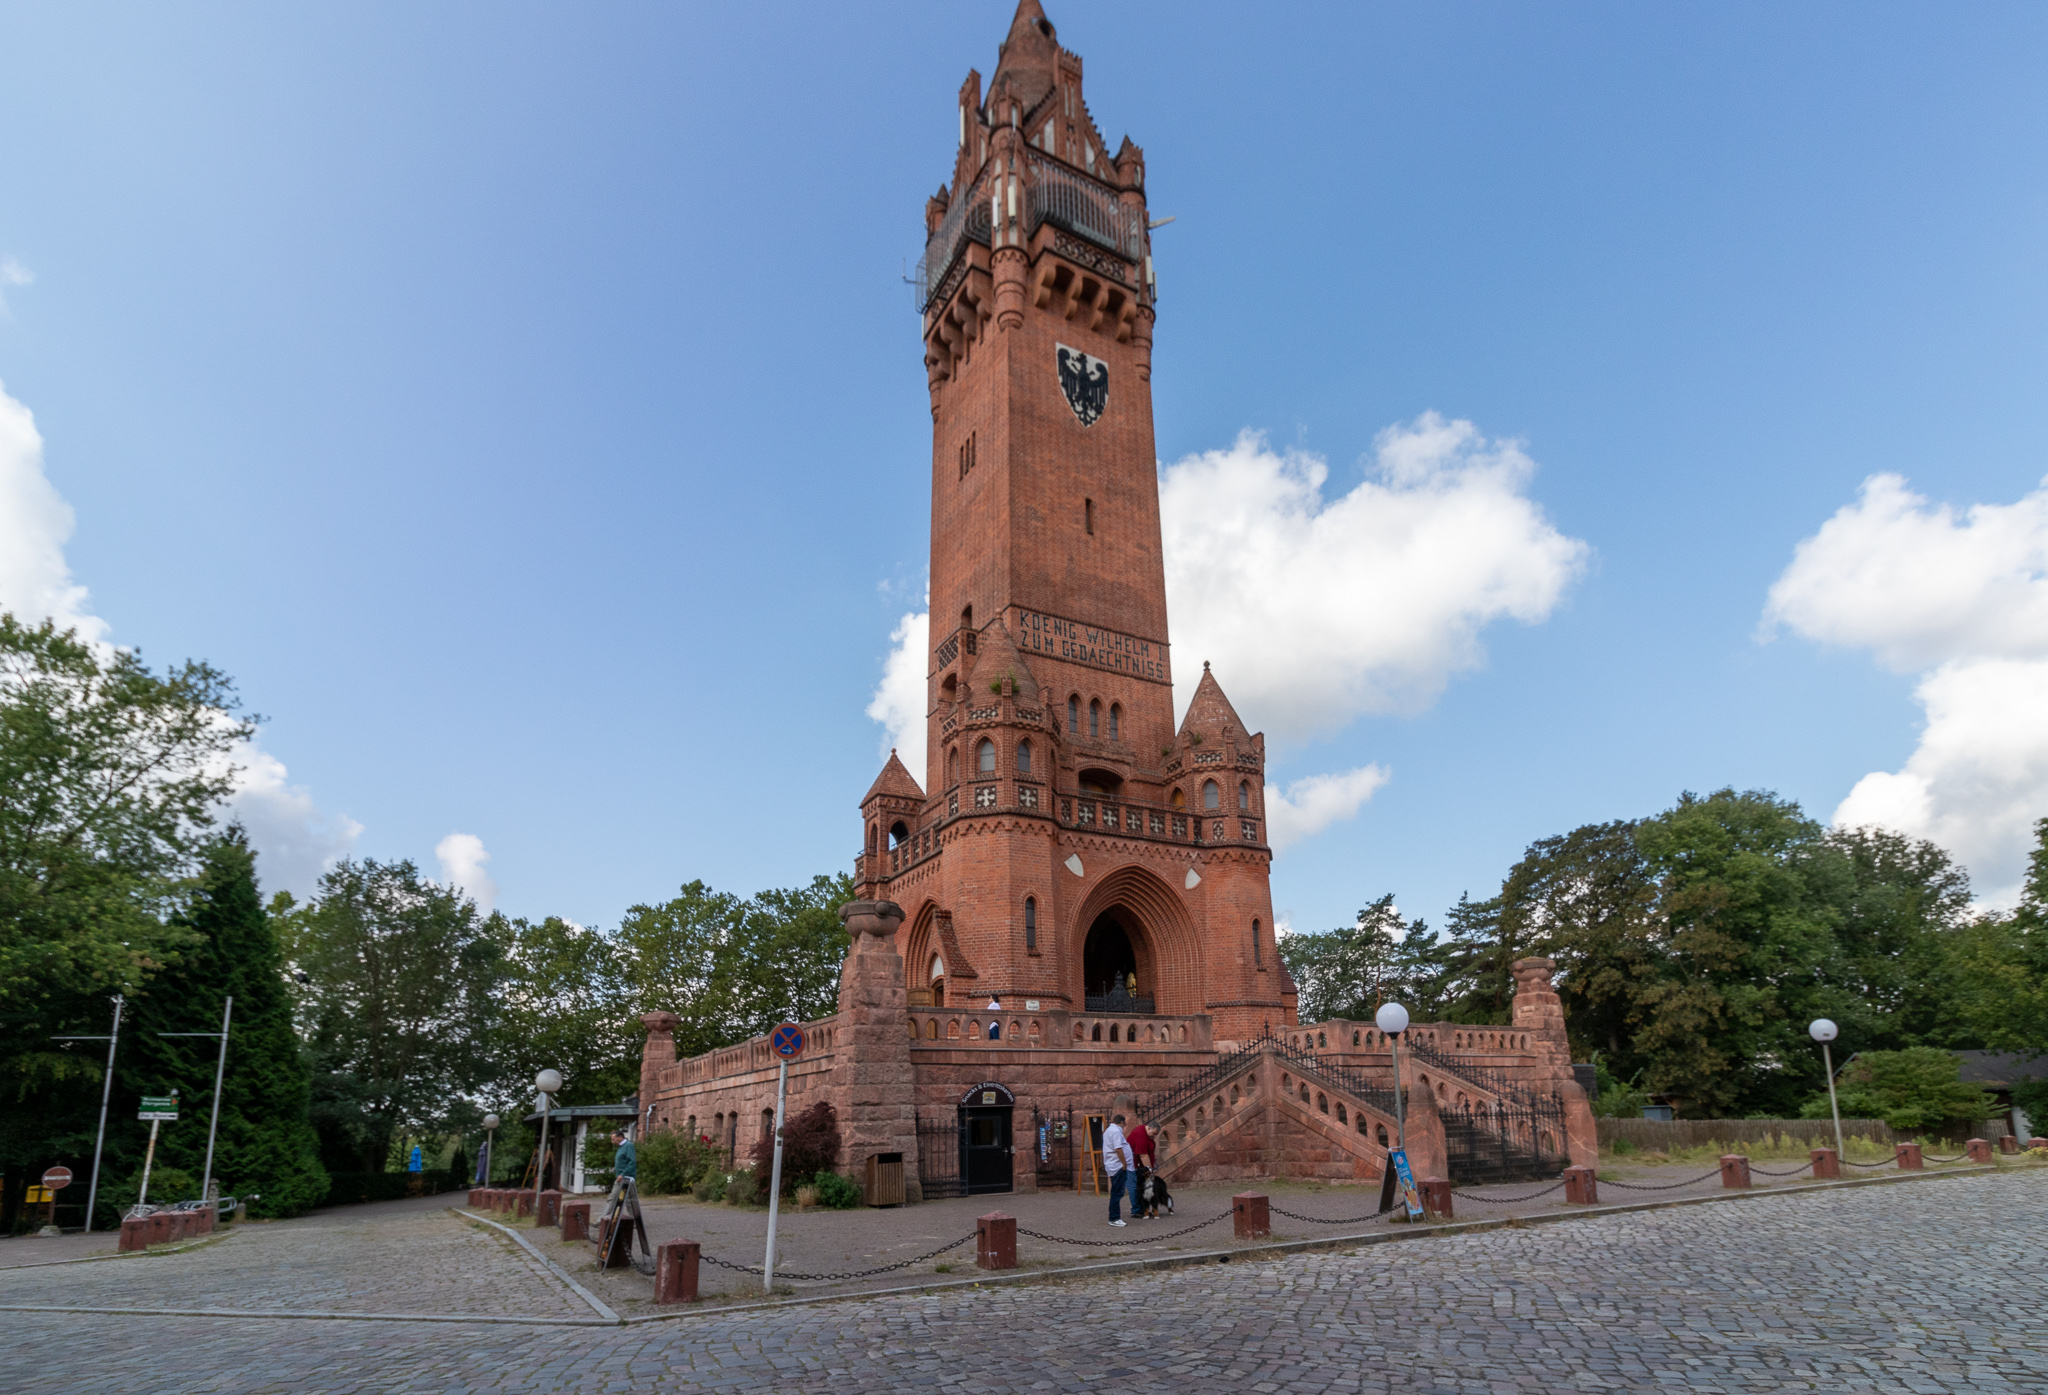 König Wilhelm Monument